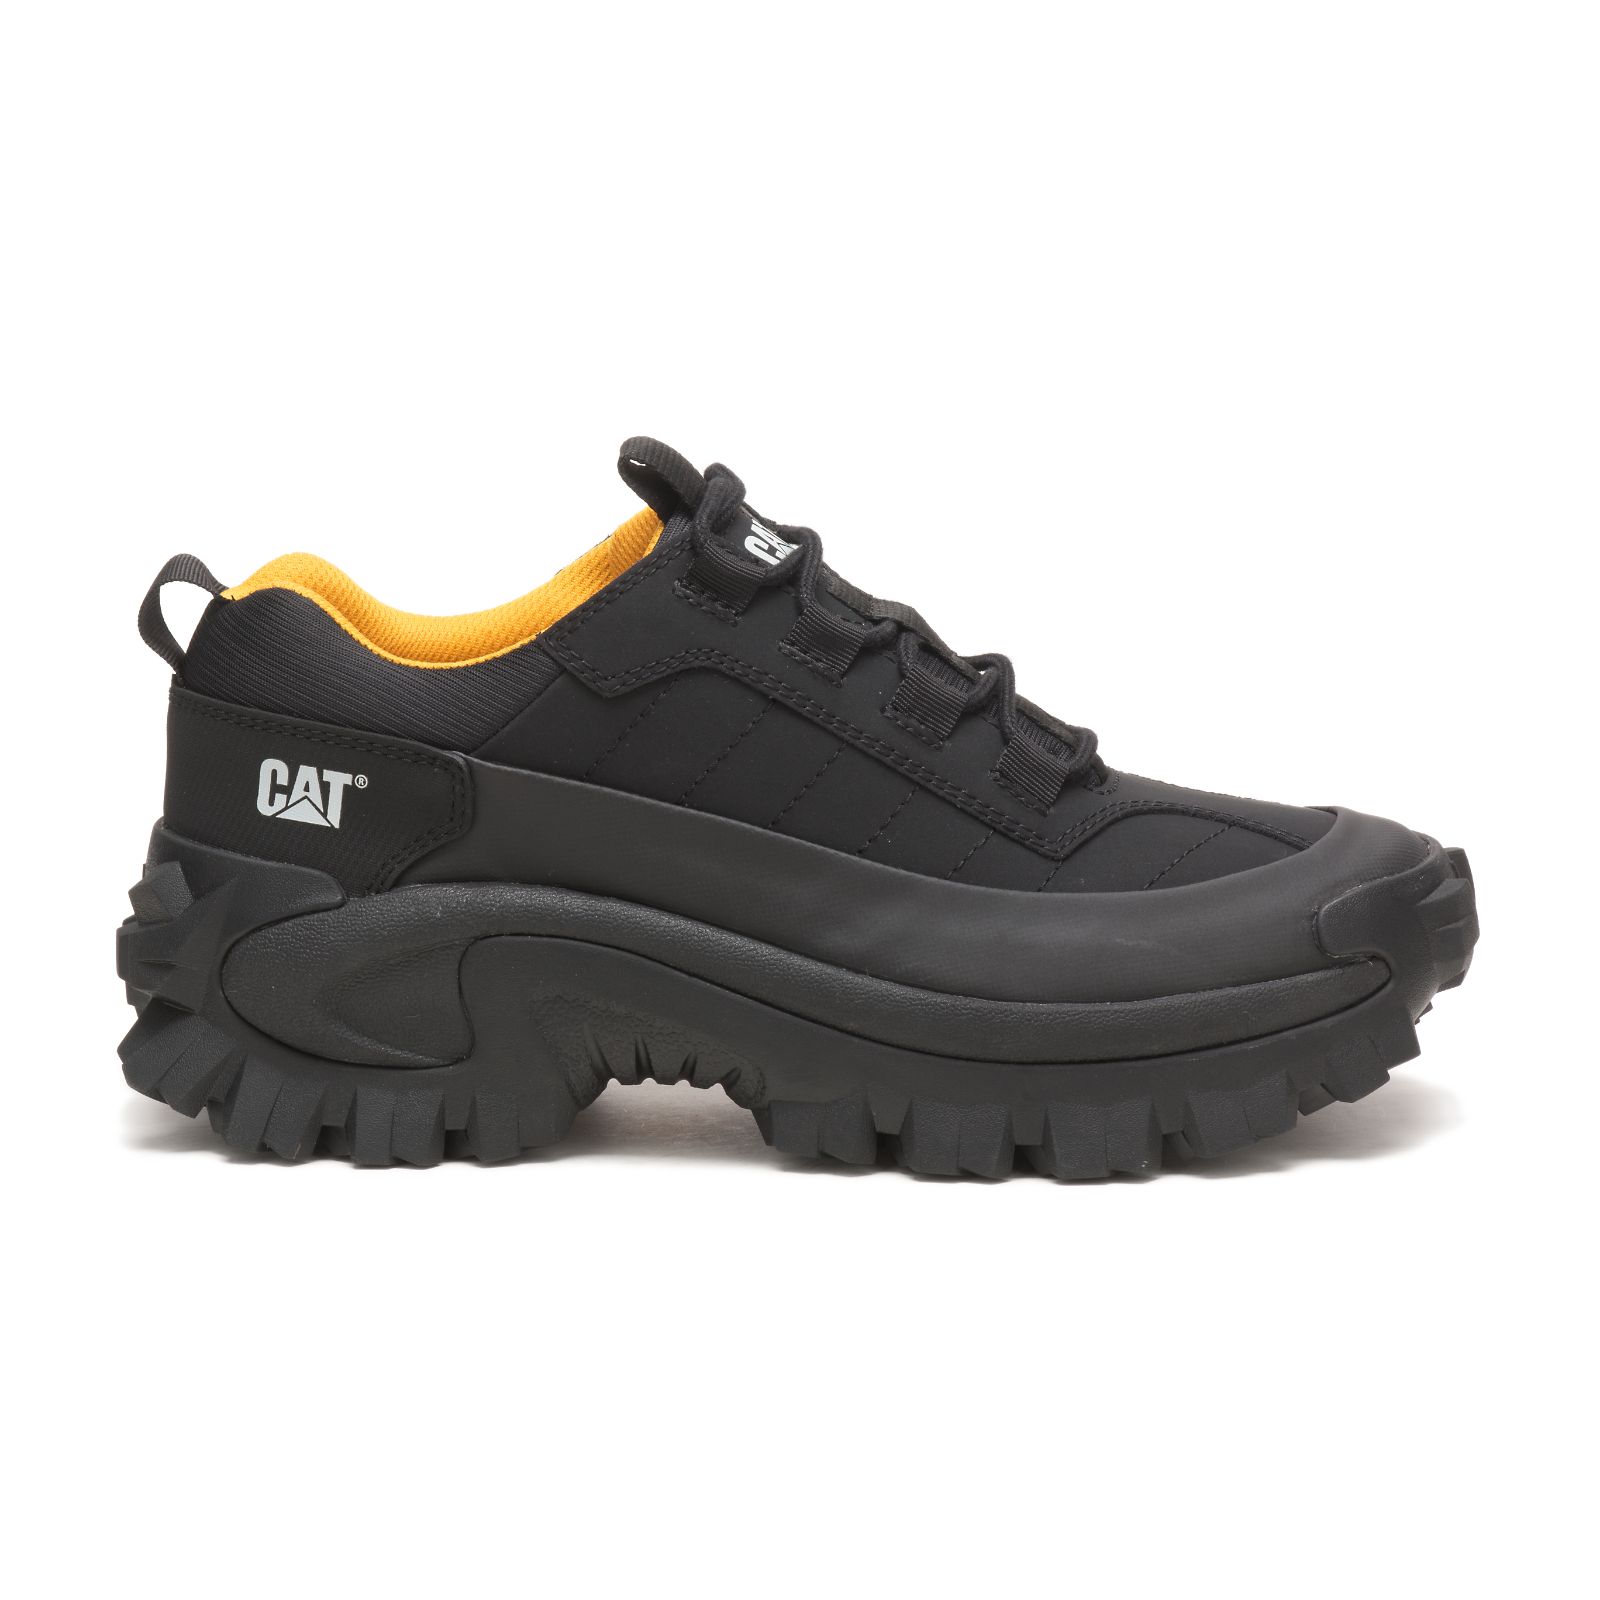 Caterpillar Shoes Pakistan - Caterpillar Intruder Waterproof Galosh Mens Sneakers Black (740153-DNR)